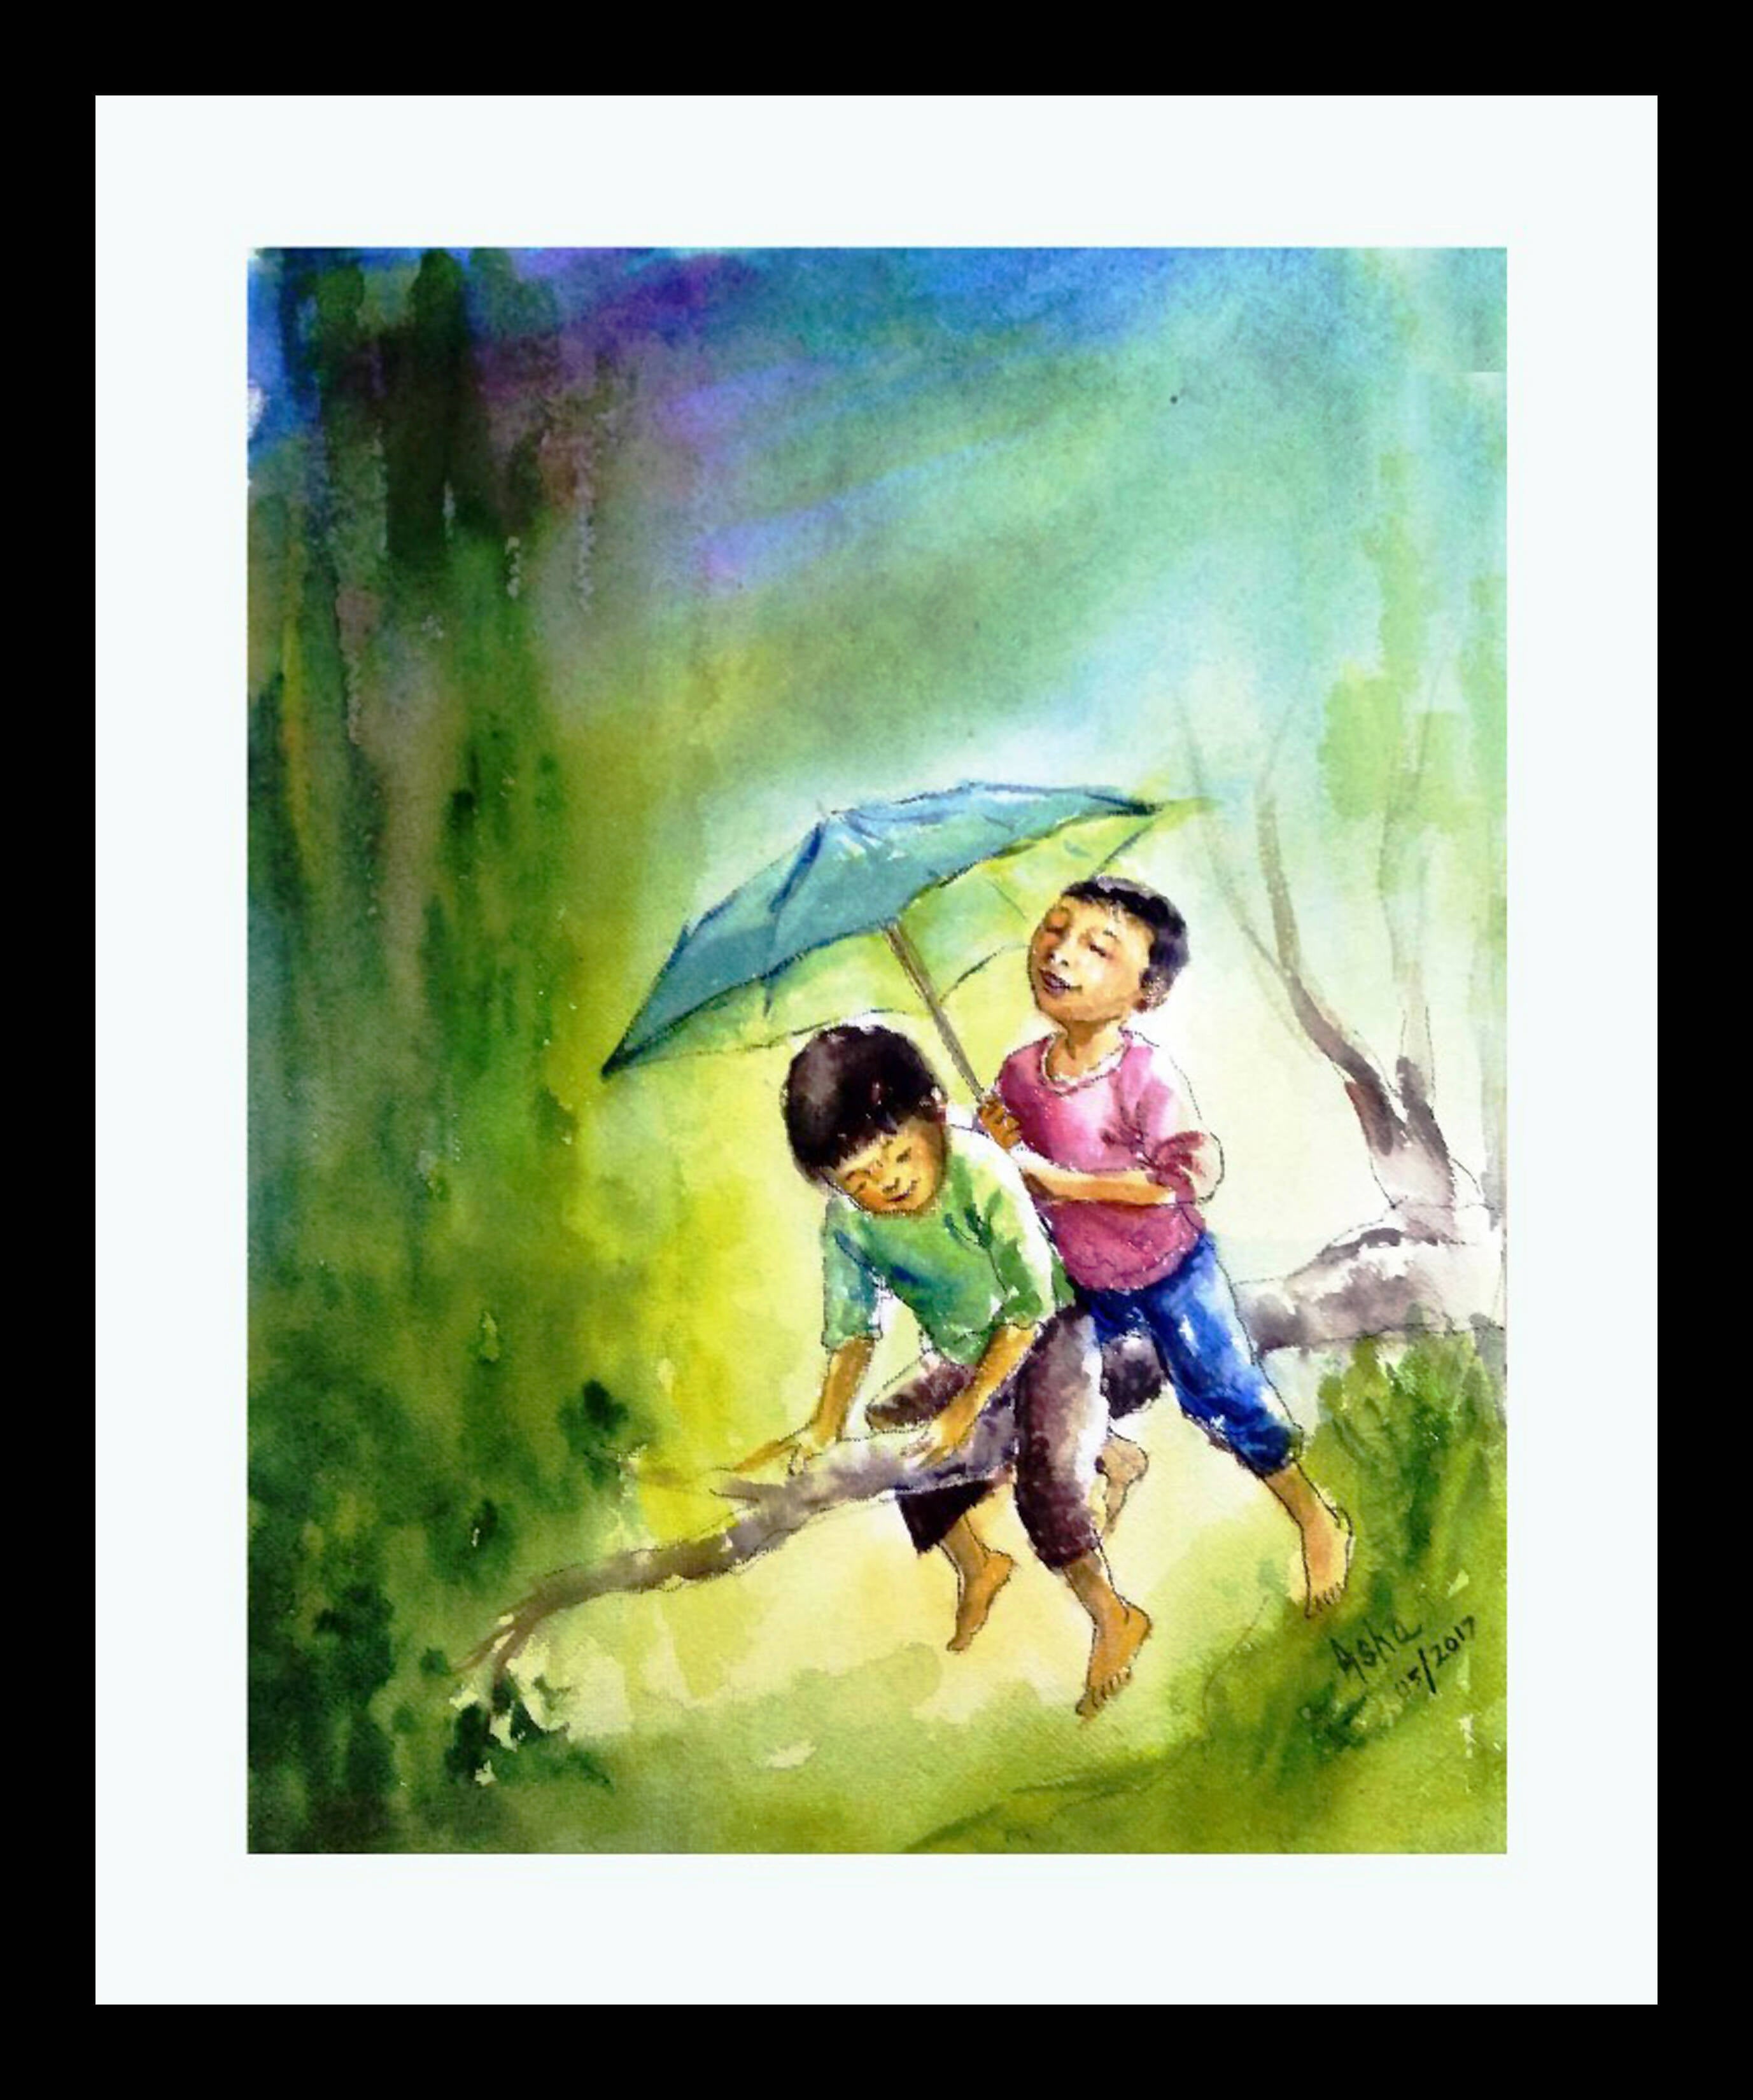 Children playing in rains - Joys of Childhood